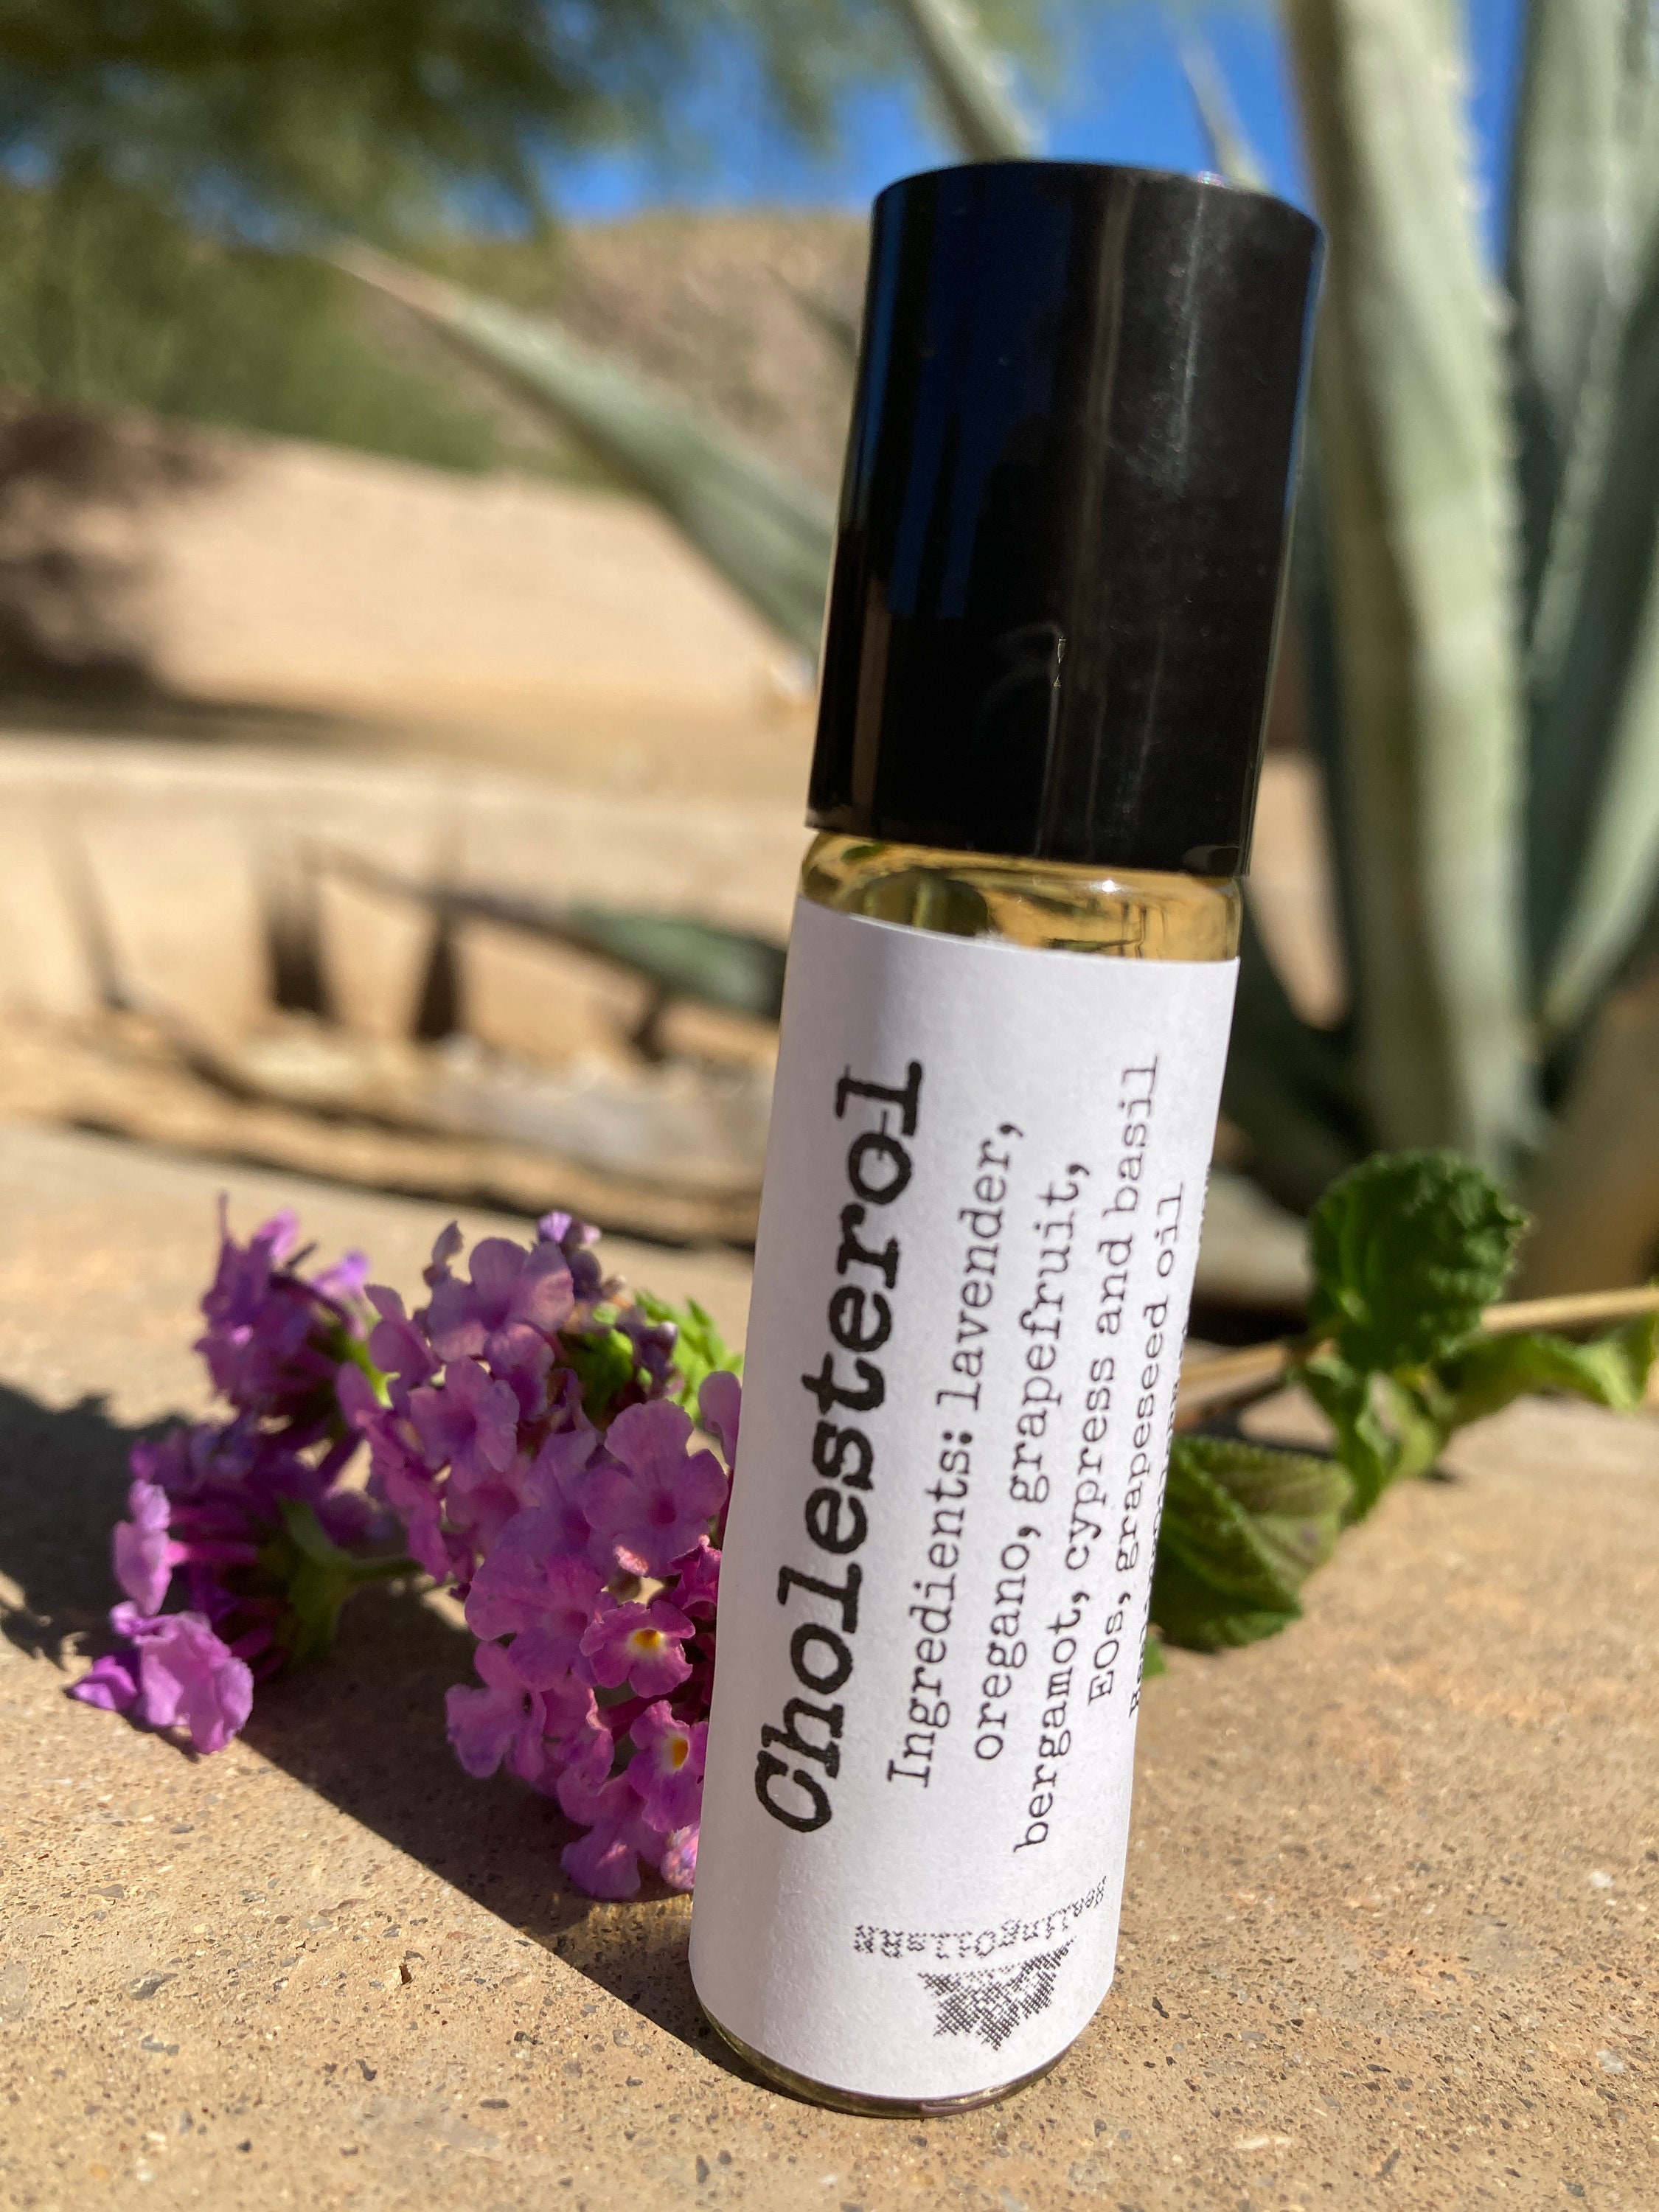 Lavender Oregano Essential Oil Blend